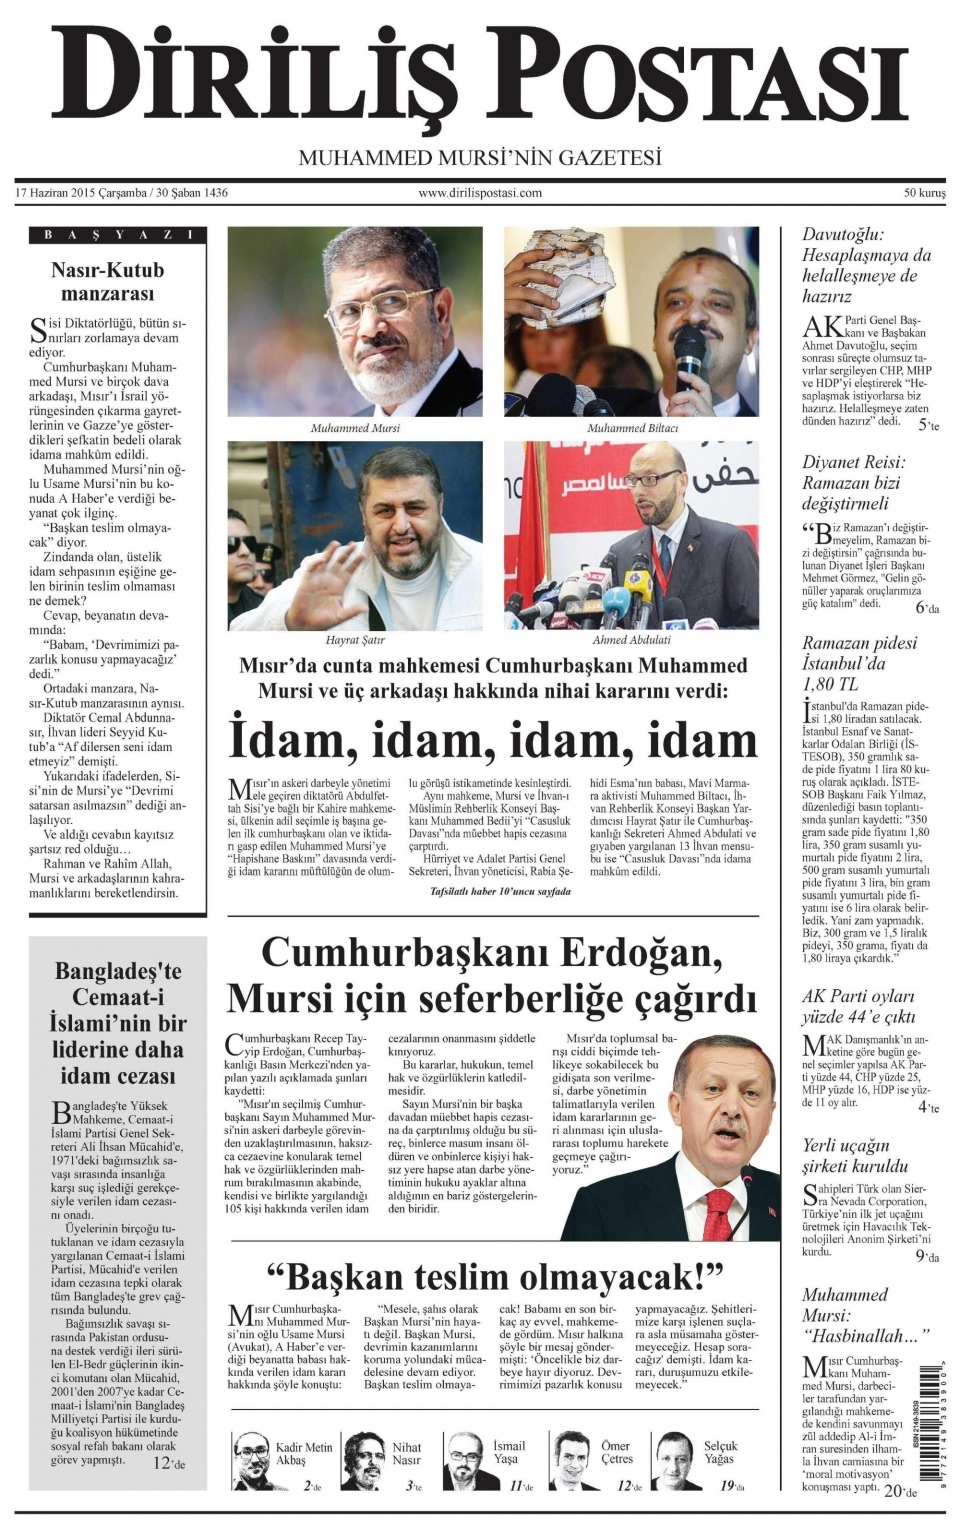 17 Haziran 2015 gazete manşetleri 4